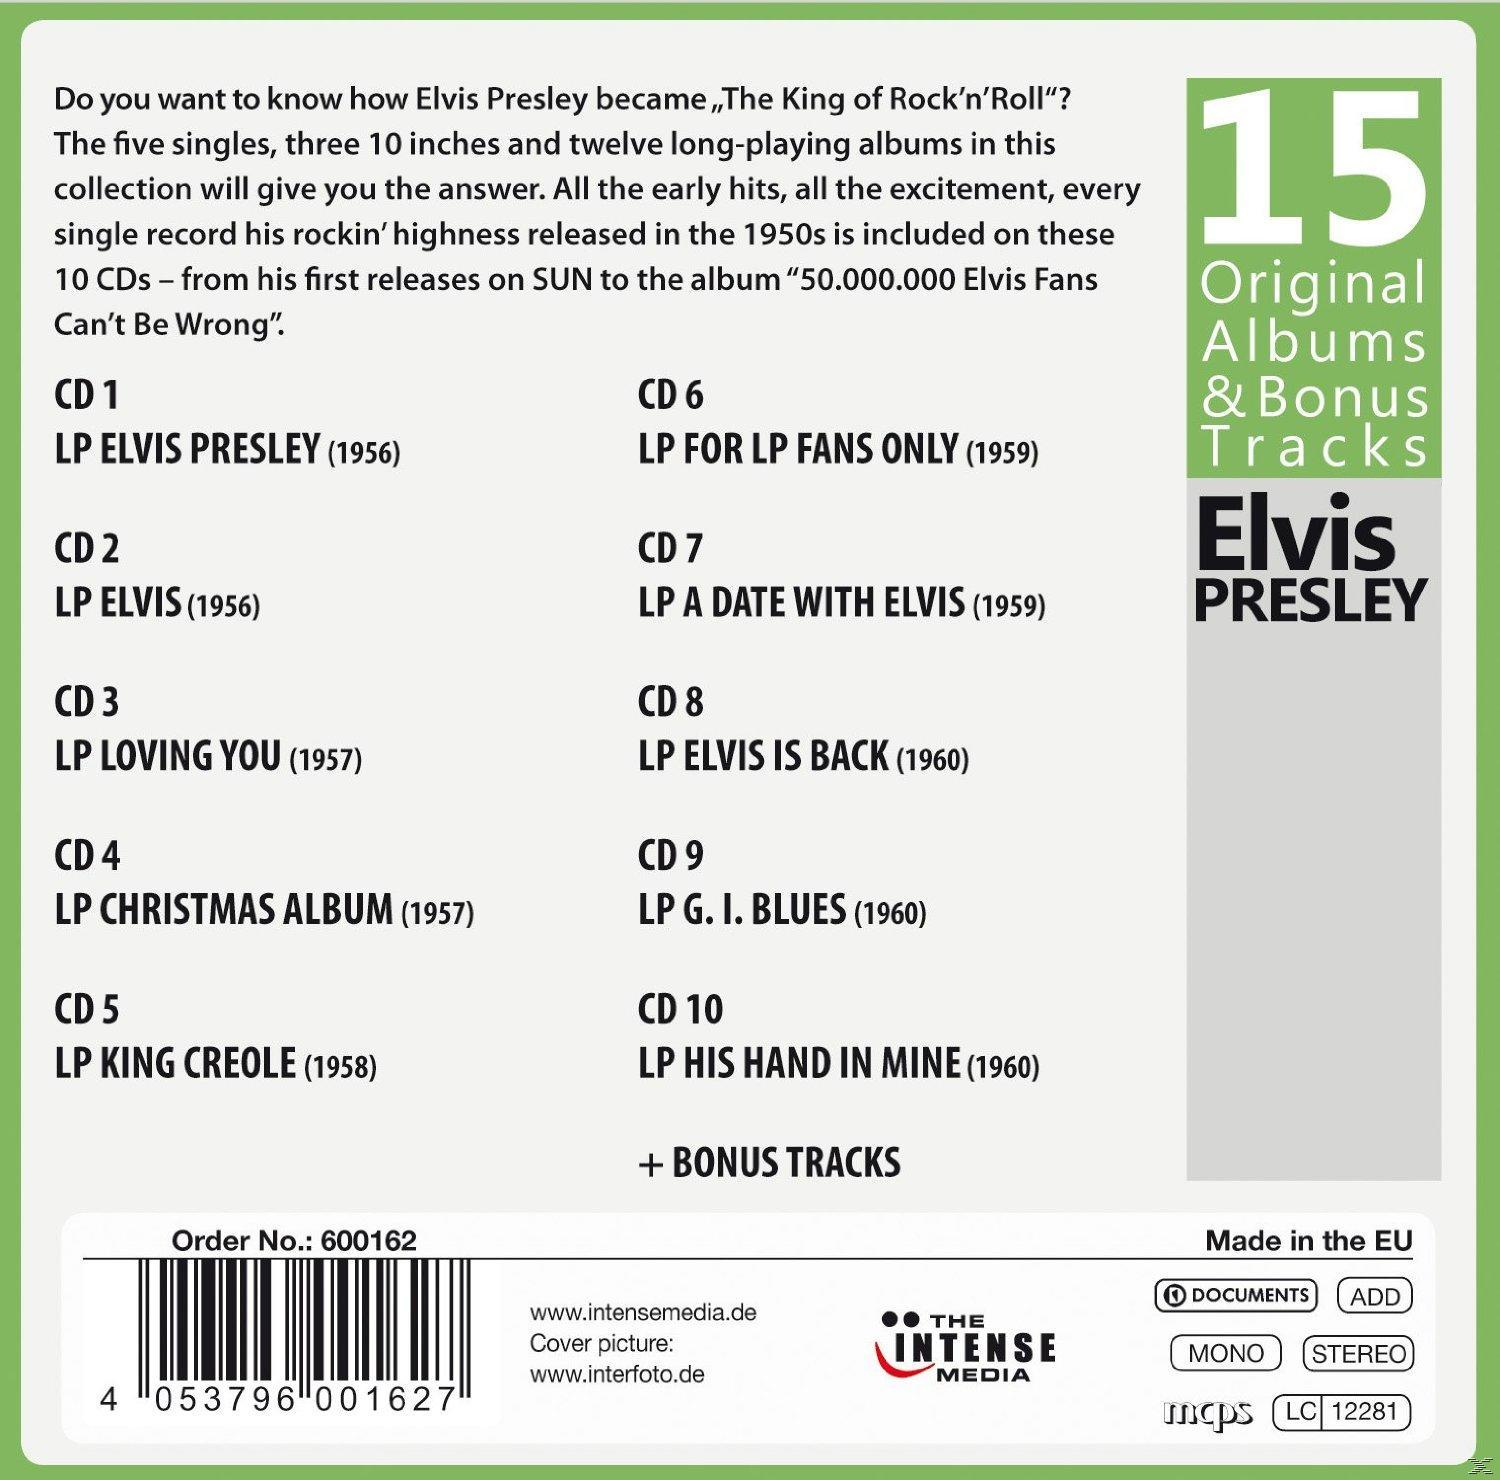 Elvis - Presley Albums (CD) Elvis Presley-Original -